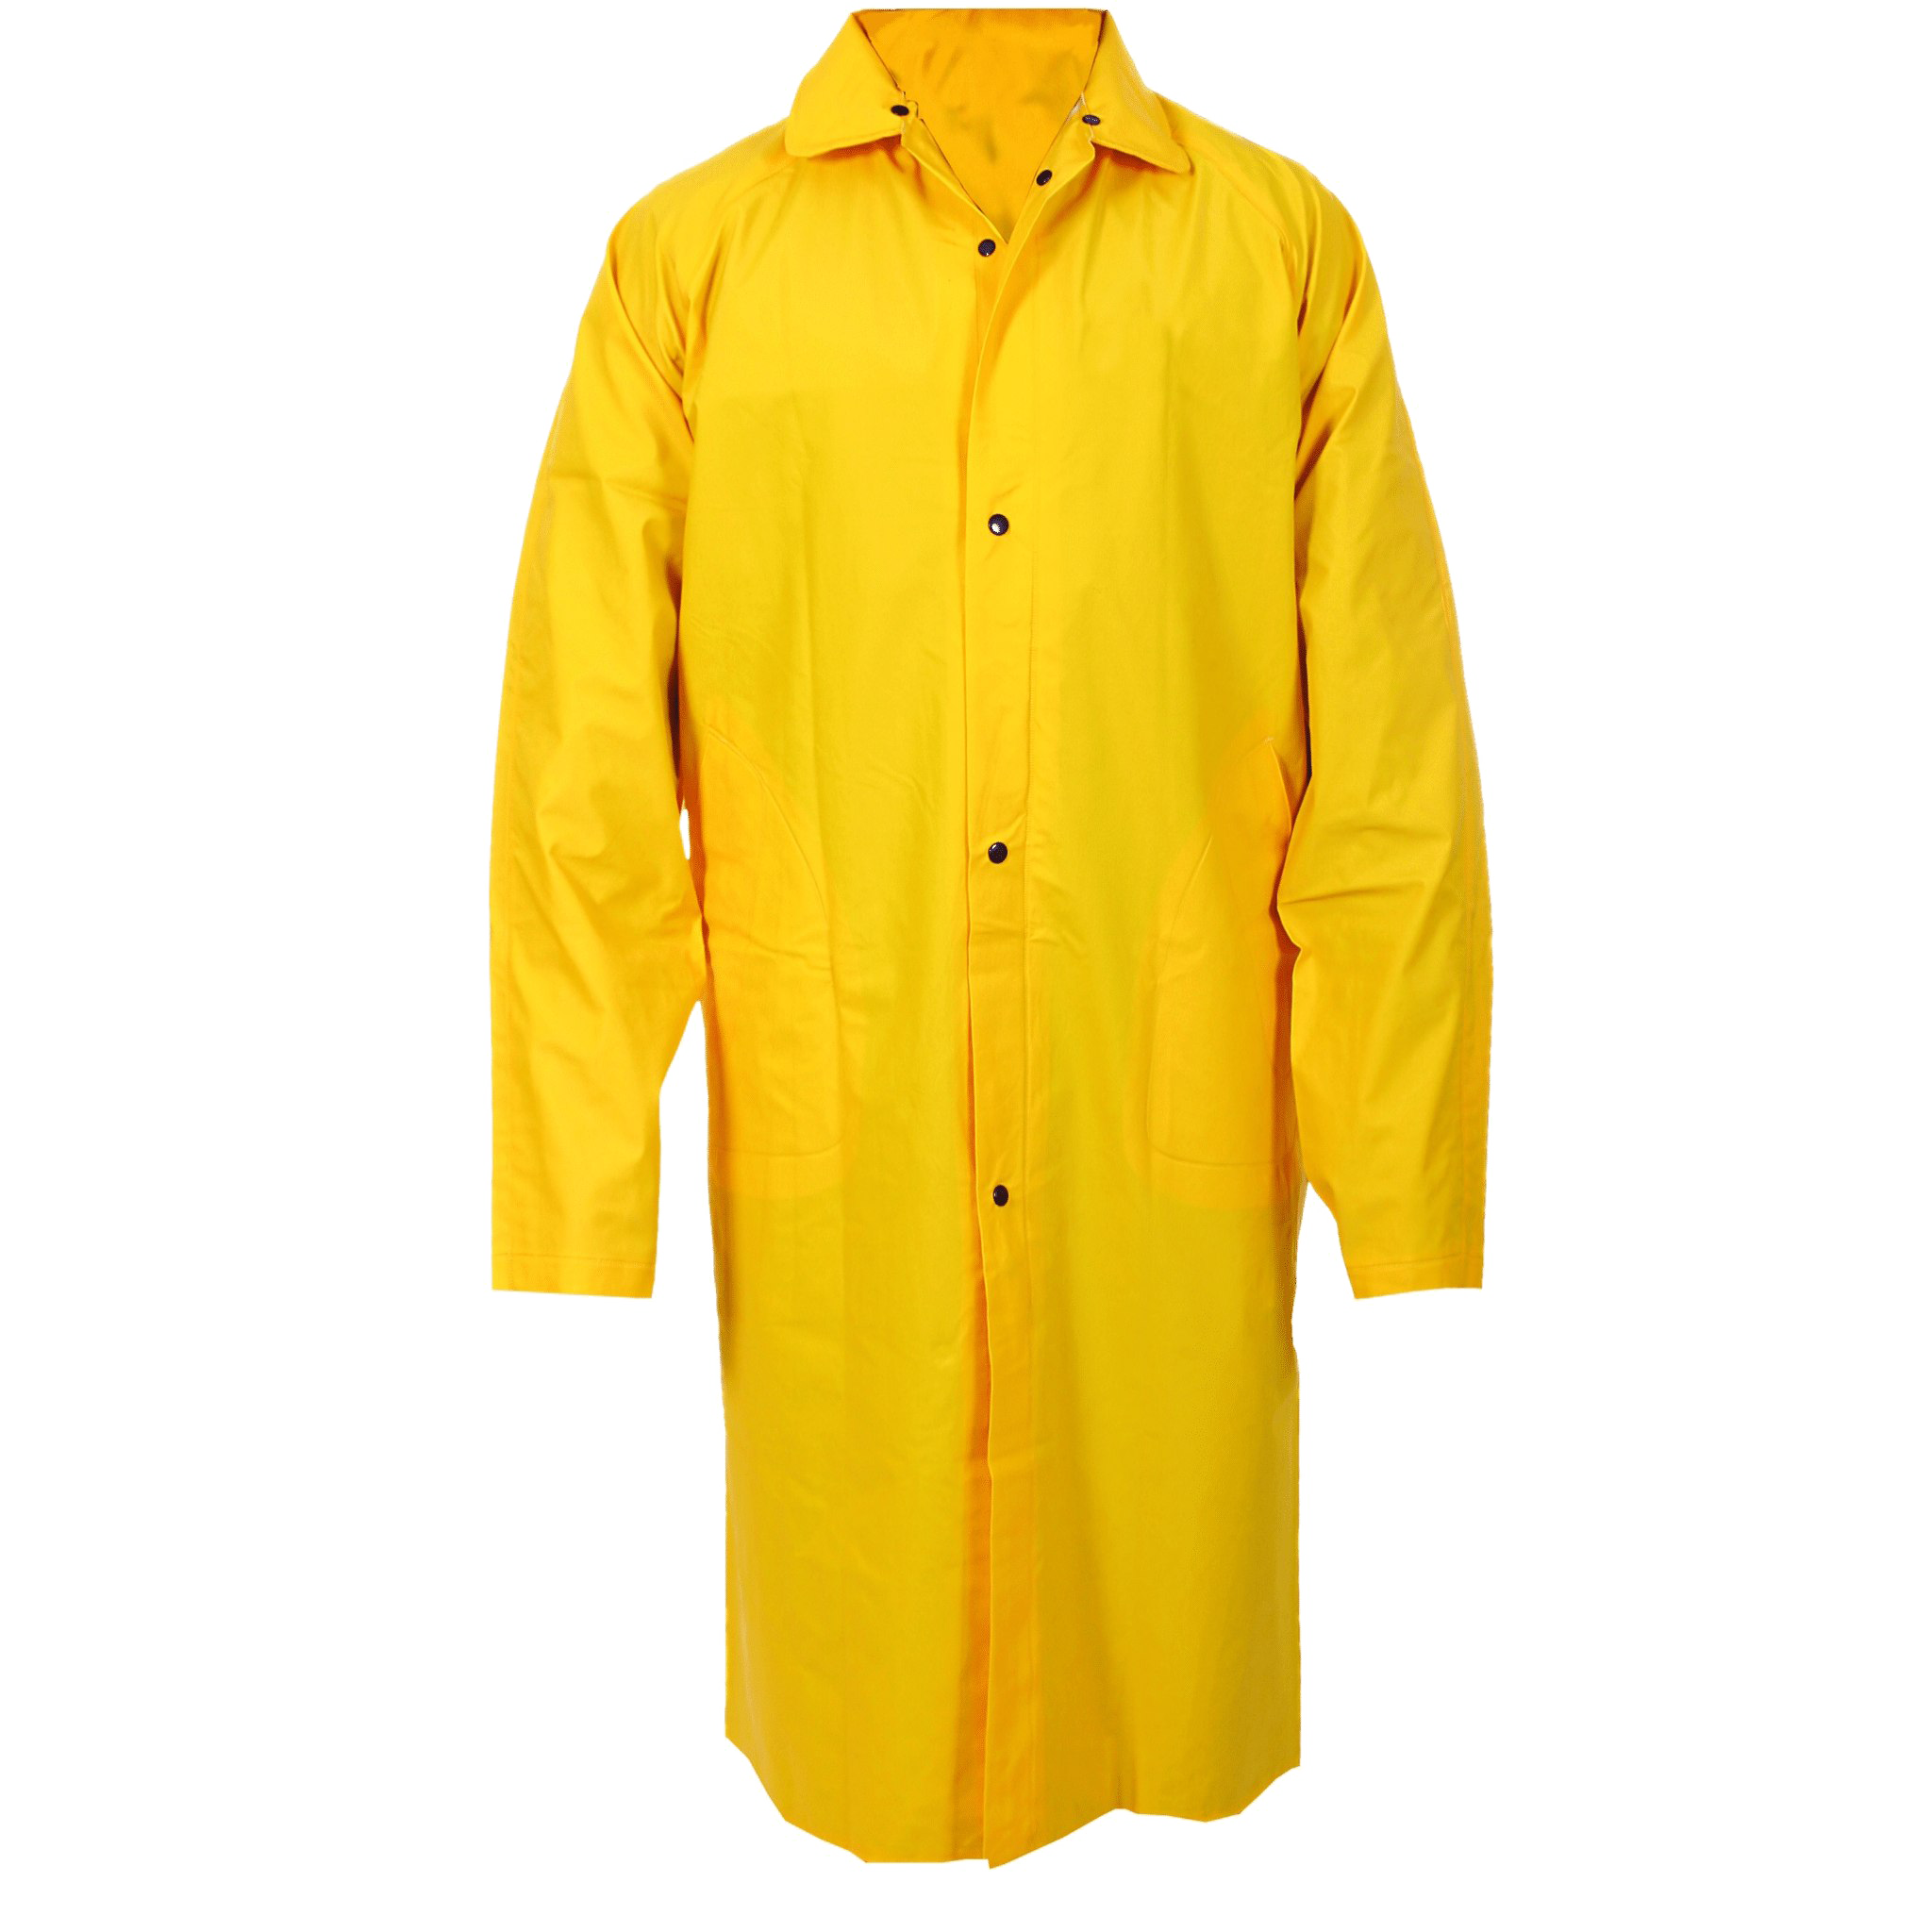 Raincoat Yellow PNG HD Image